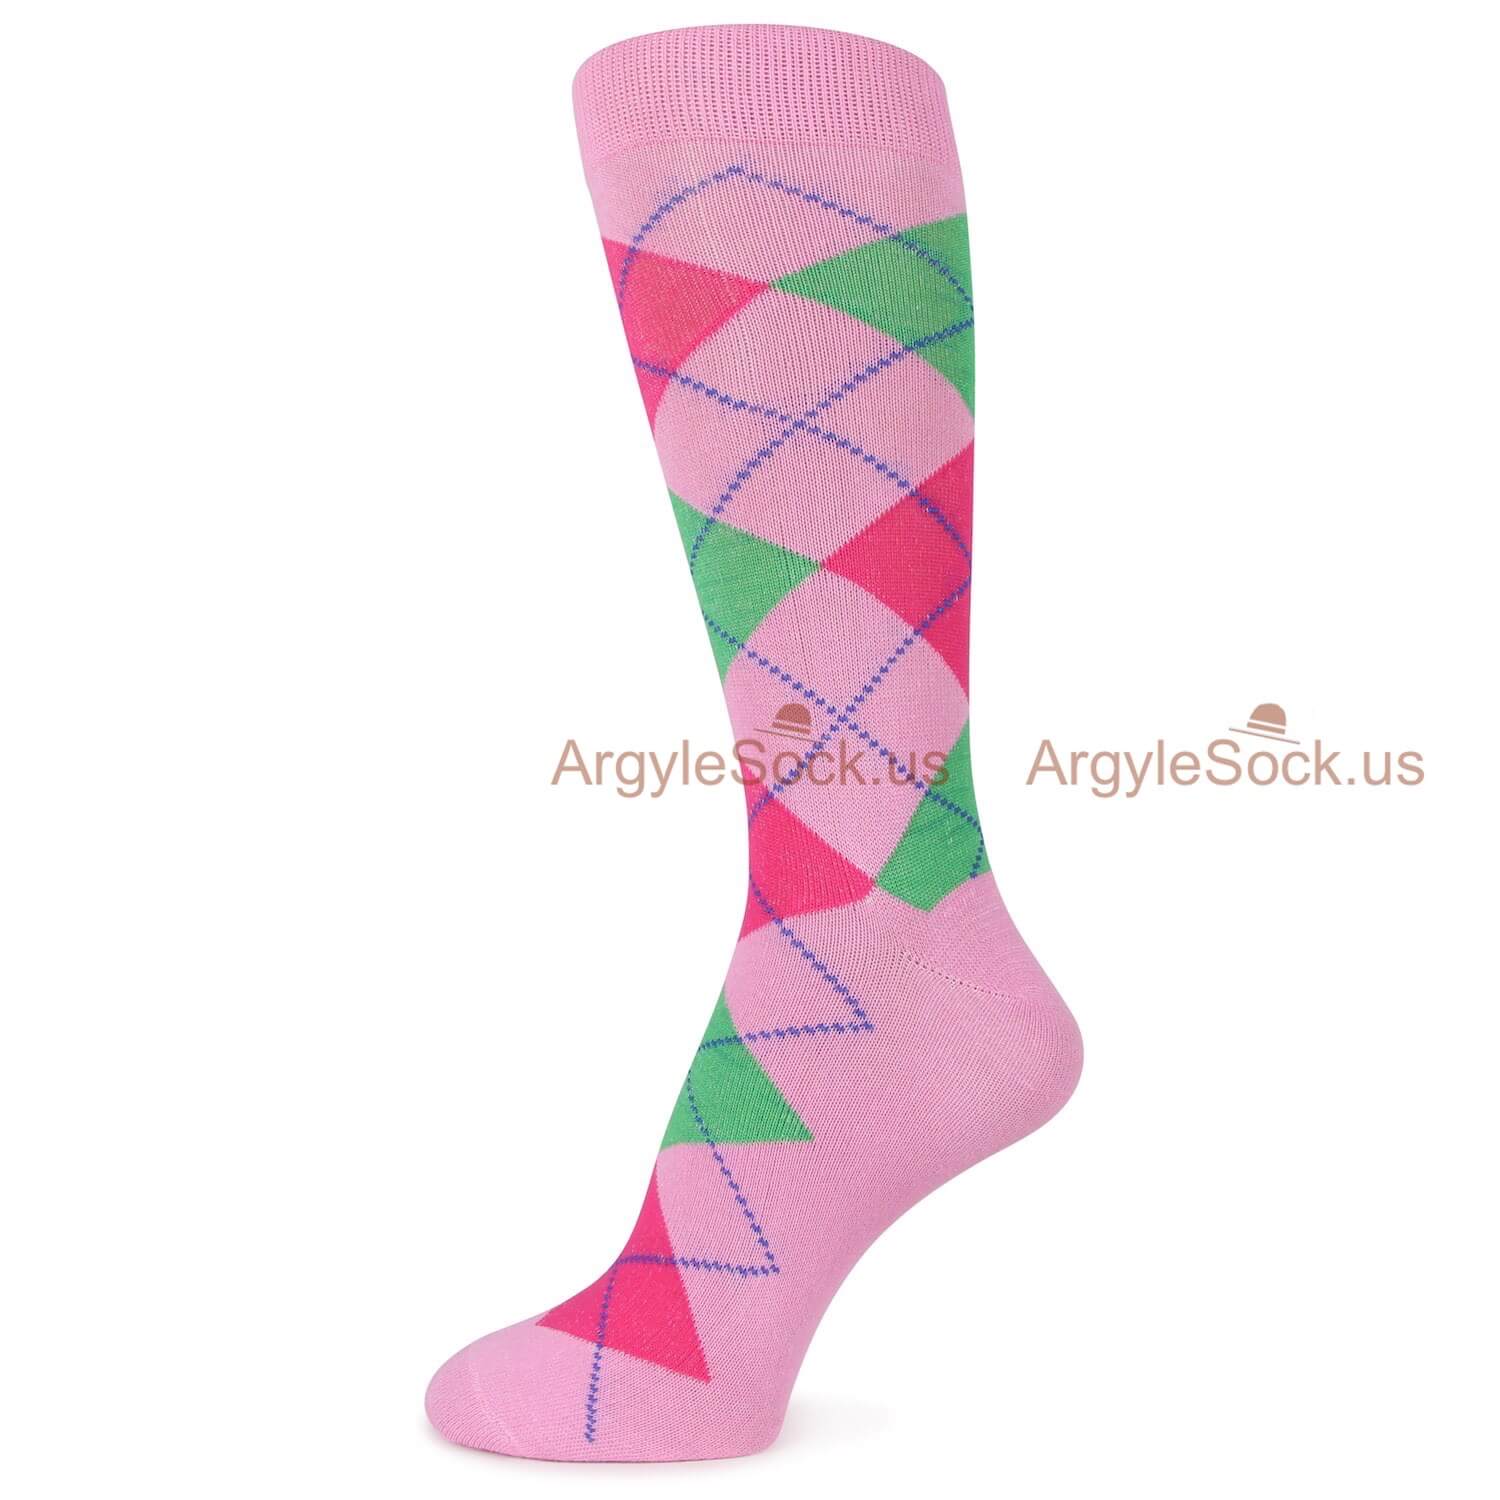 Pink and Green Argyle Themed Socks for Men